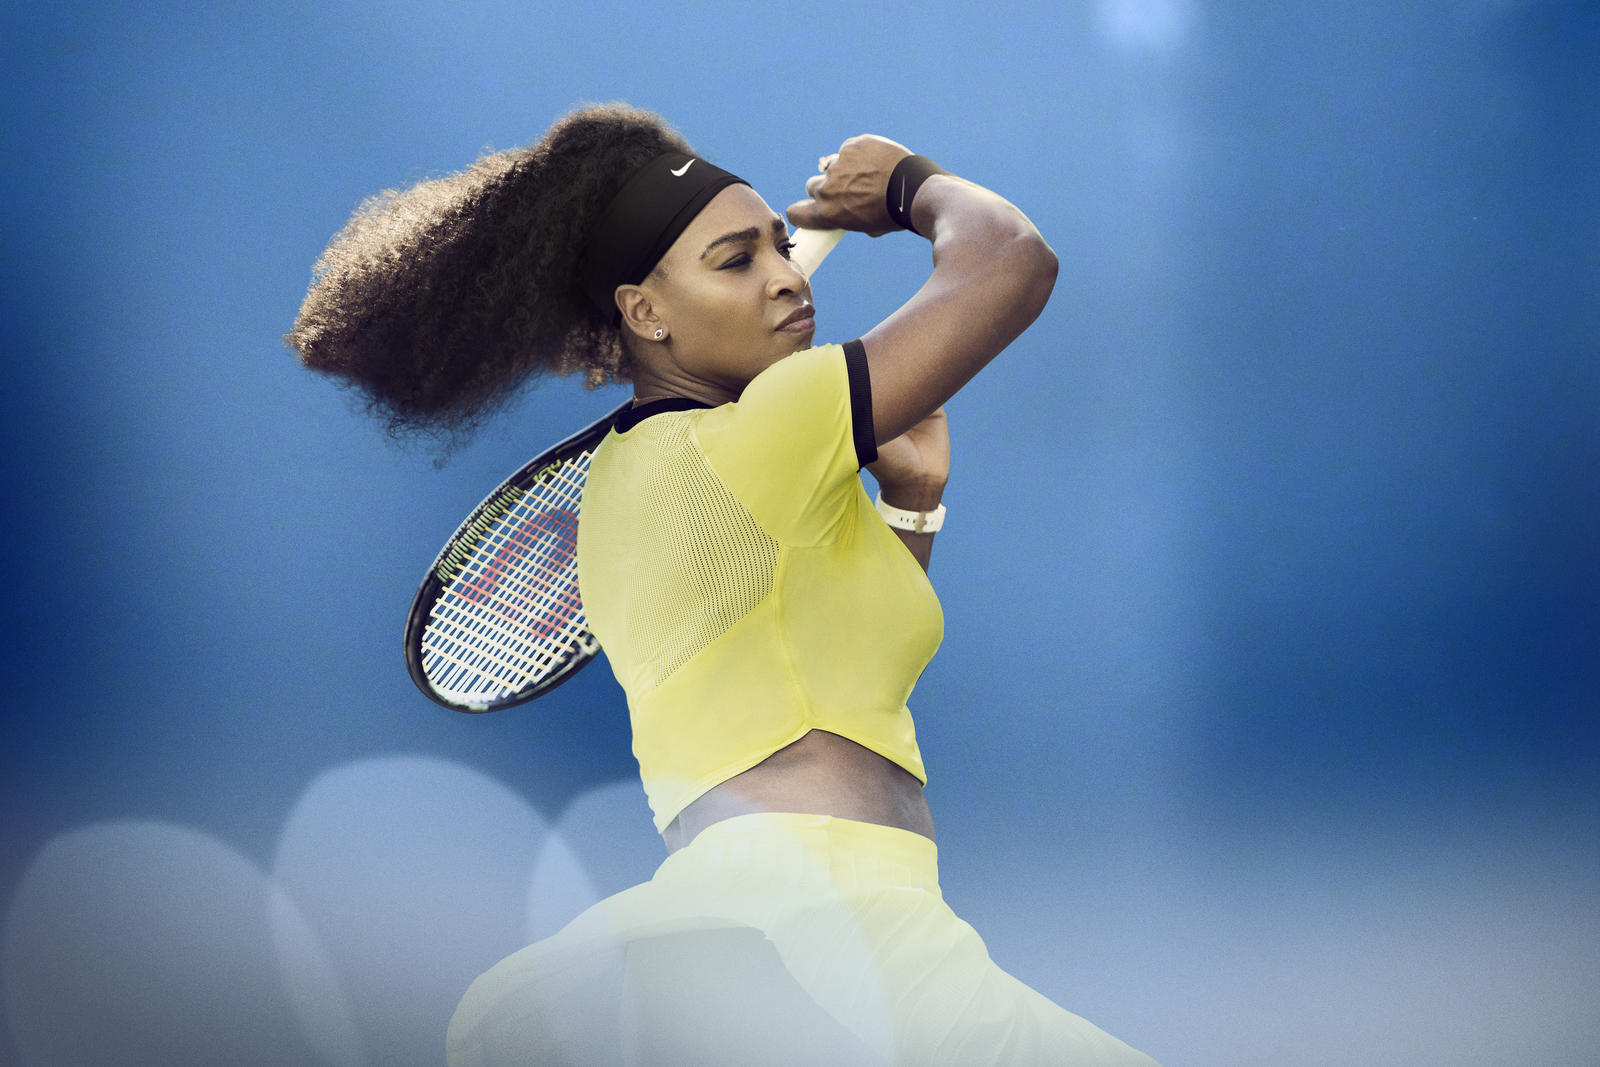 NikeCourt_Serena_Williams_3_native_1600.jpg